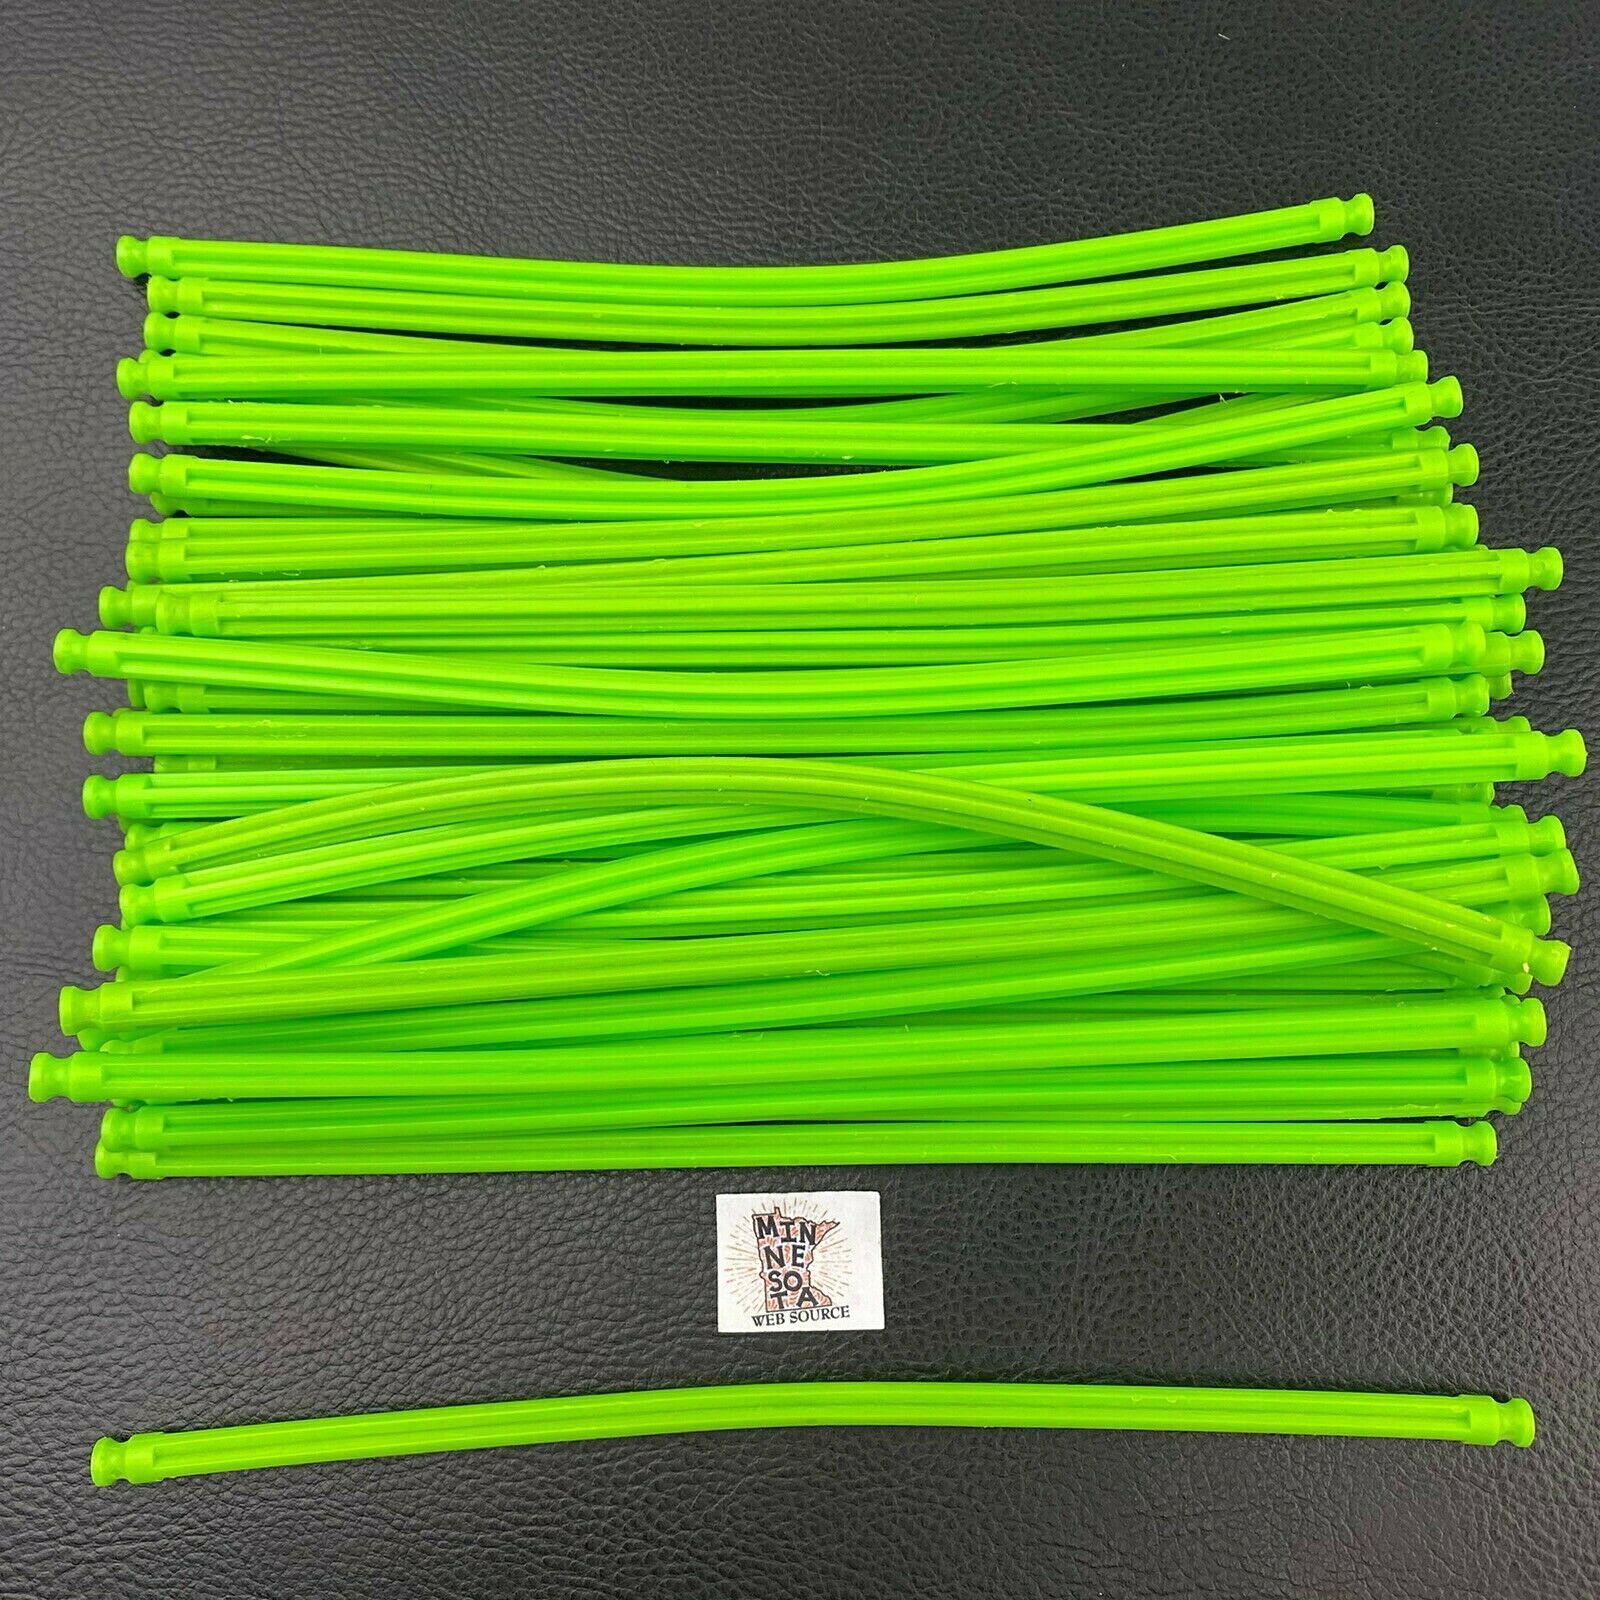 50 Knex Fluorescent Green 7-1/2" Flexible Rods - 7.5" Standard K'nex Parts Lot